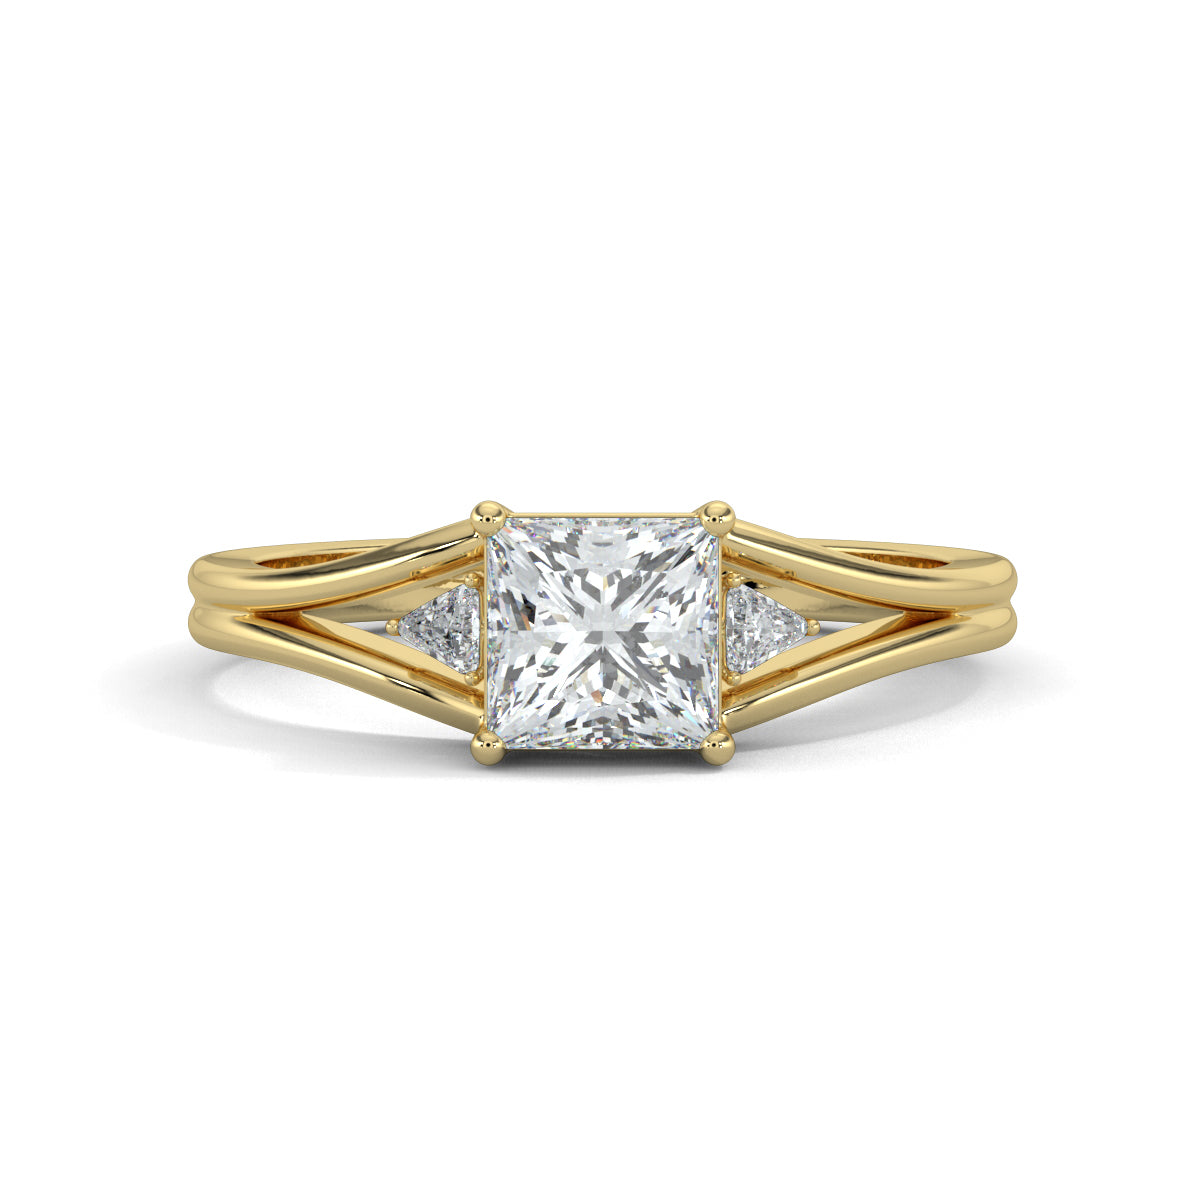 Yellow Gold, Diamond Ring, Enchantress Solitaire Diamond Ring, Natural Diamonds, Lab-Grown Diamonds, Princess Cut Diamond, Trillion Diamonds, Split Shank Band, Elegant Diamond Ring